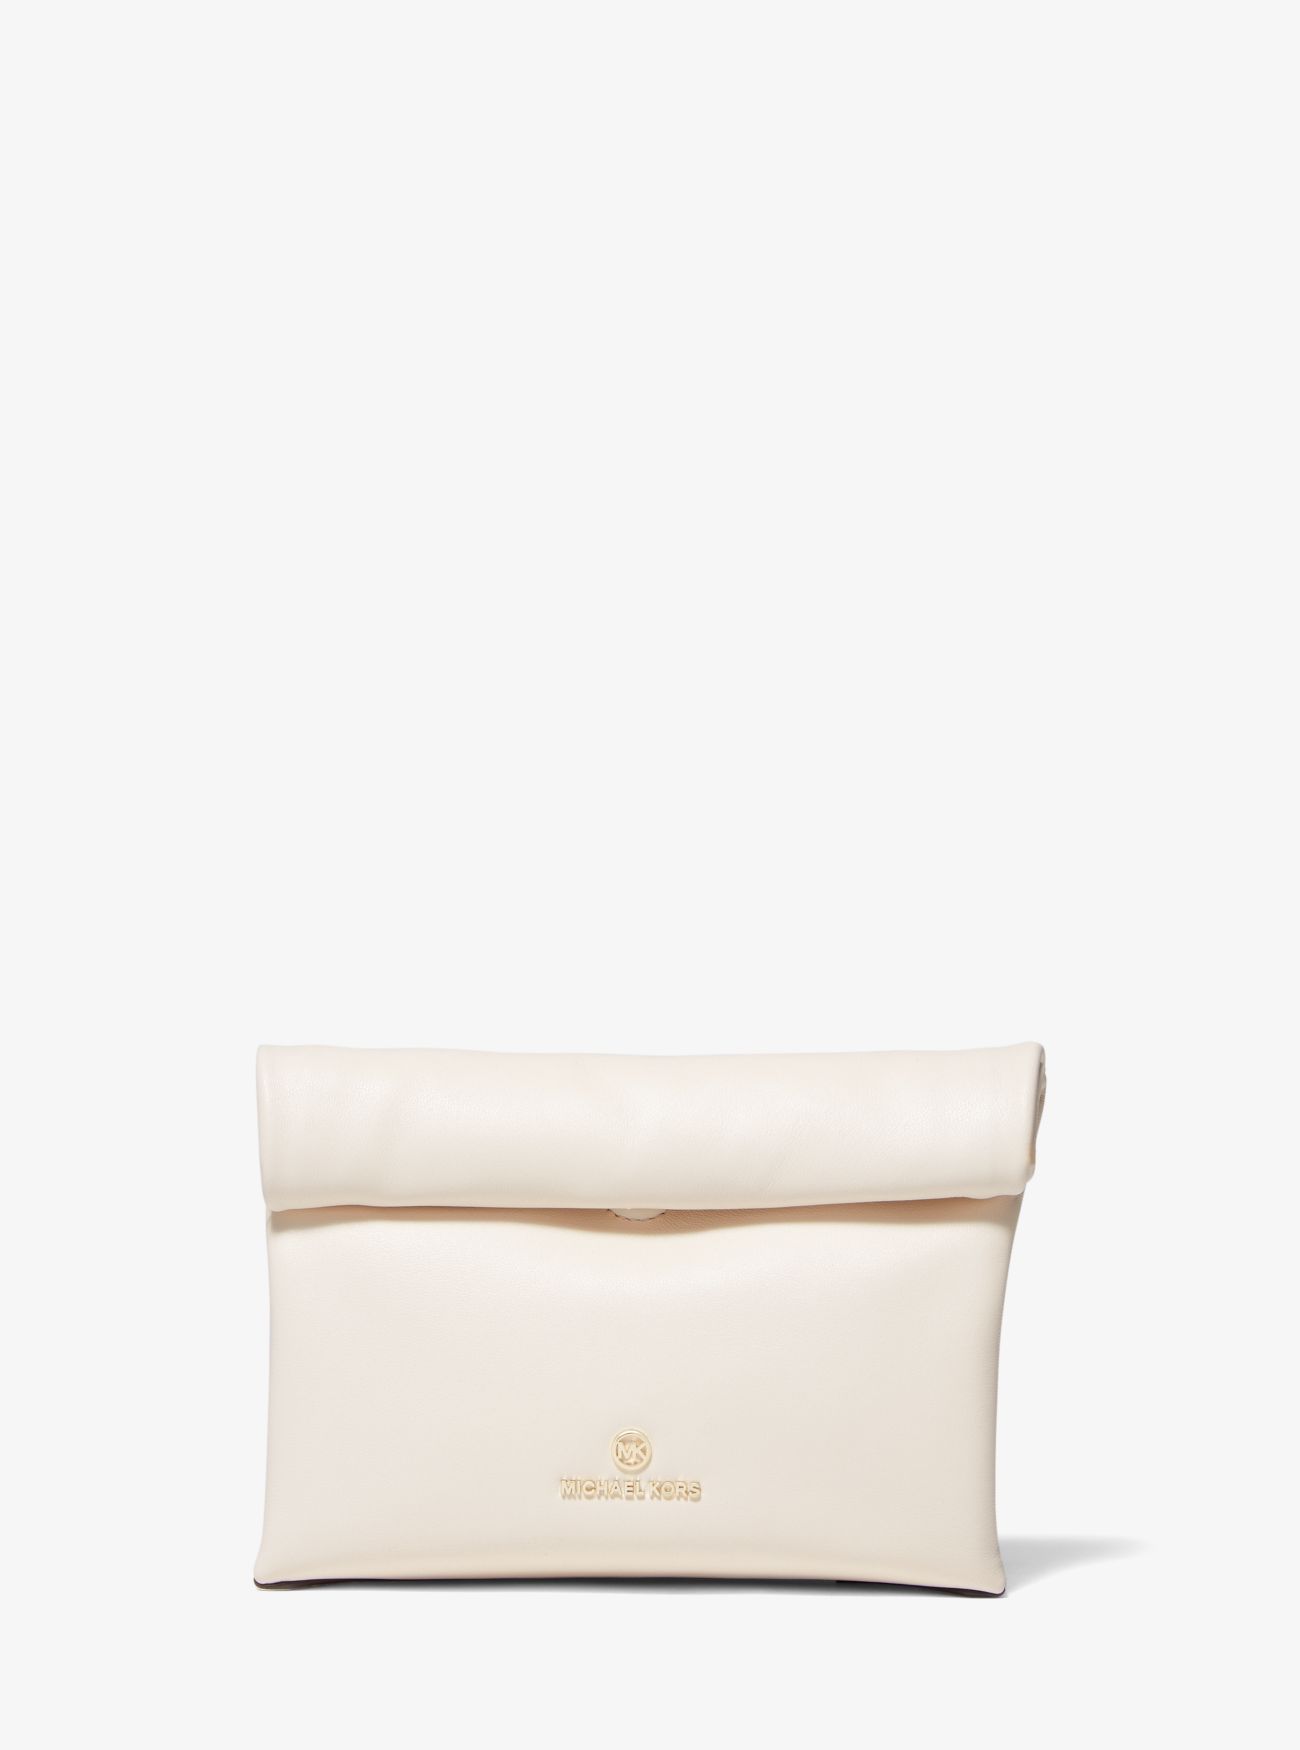 MK Lola Small Leather Convertible Crossbody Bag - Lt Cream - Michael Kors